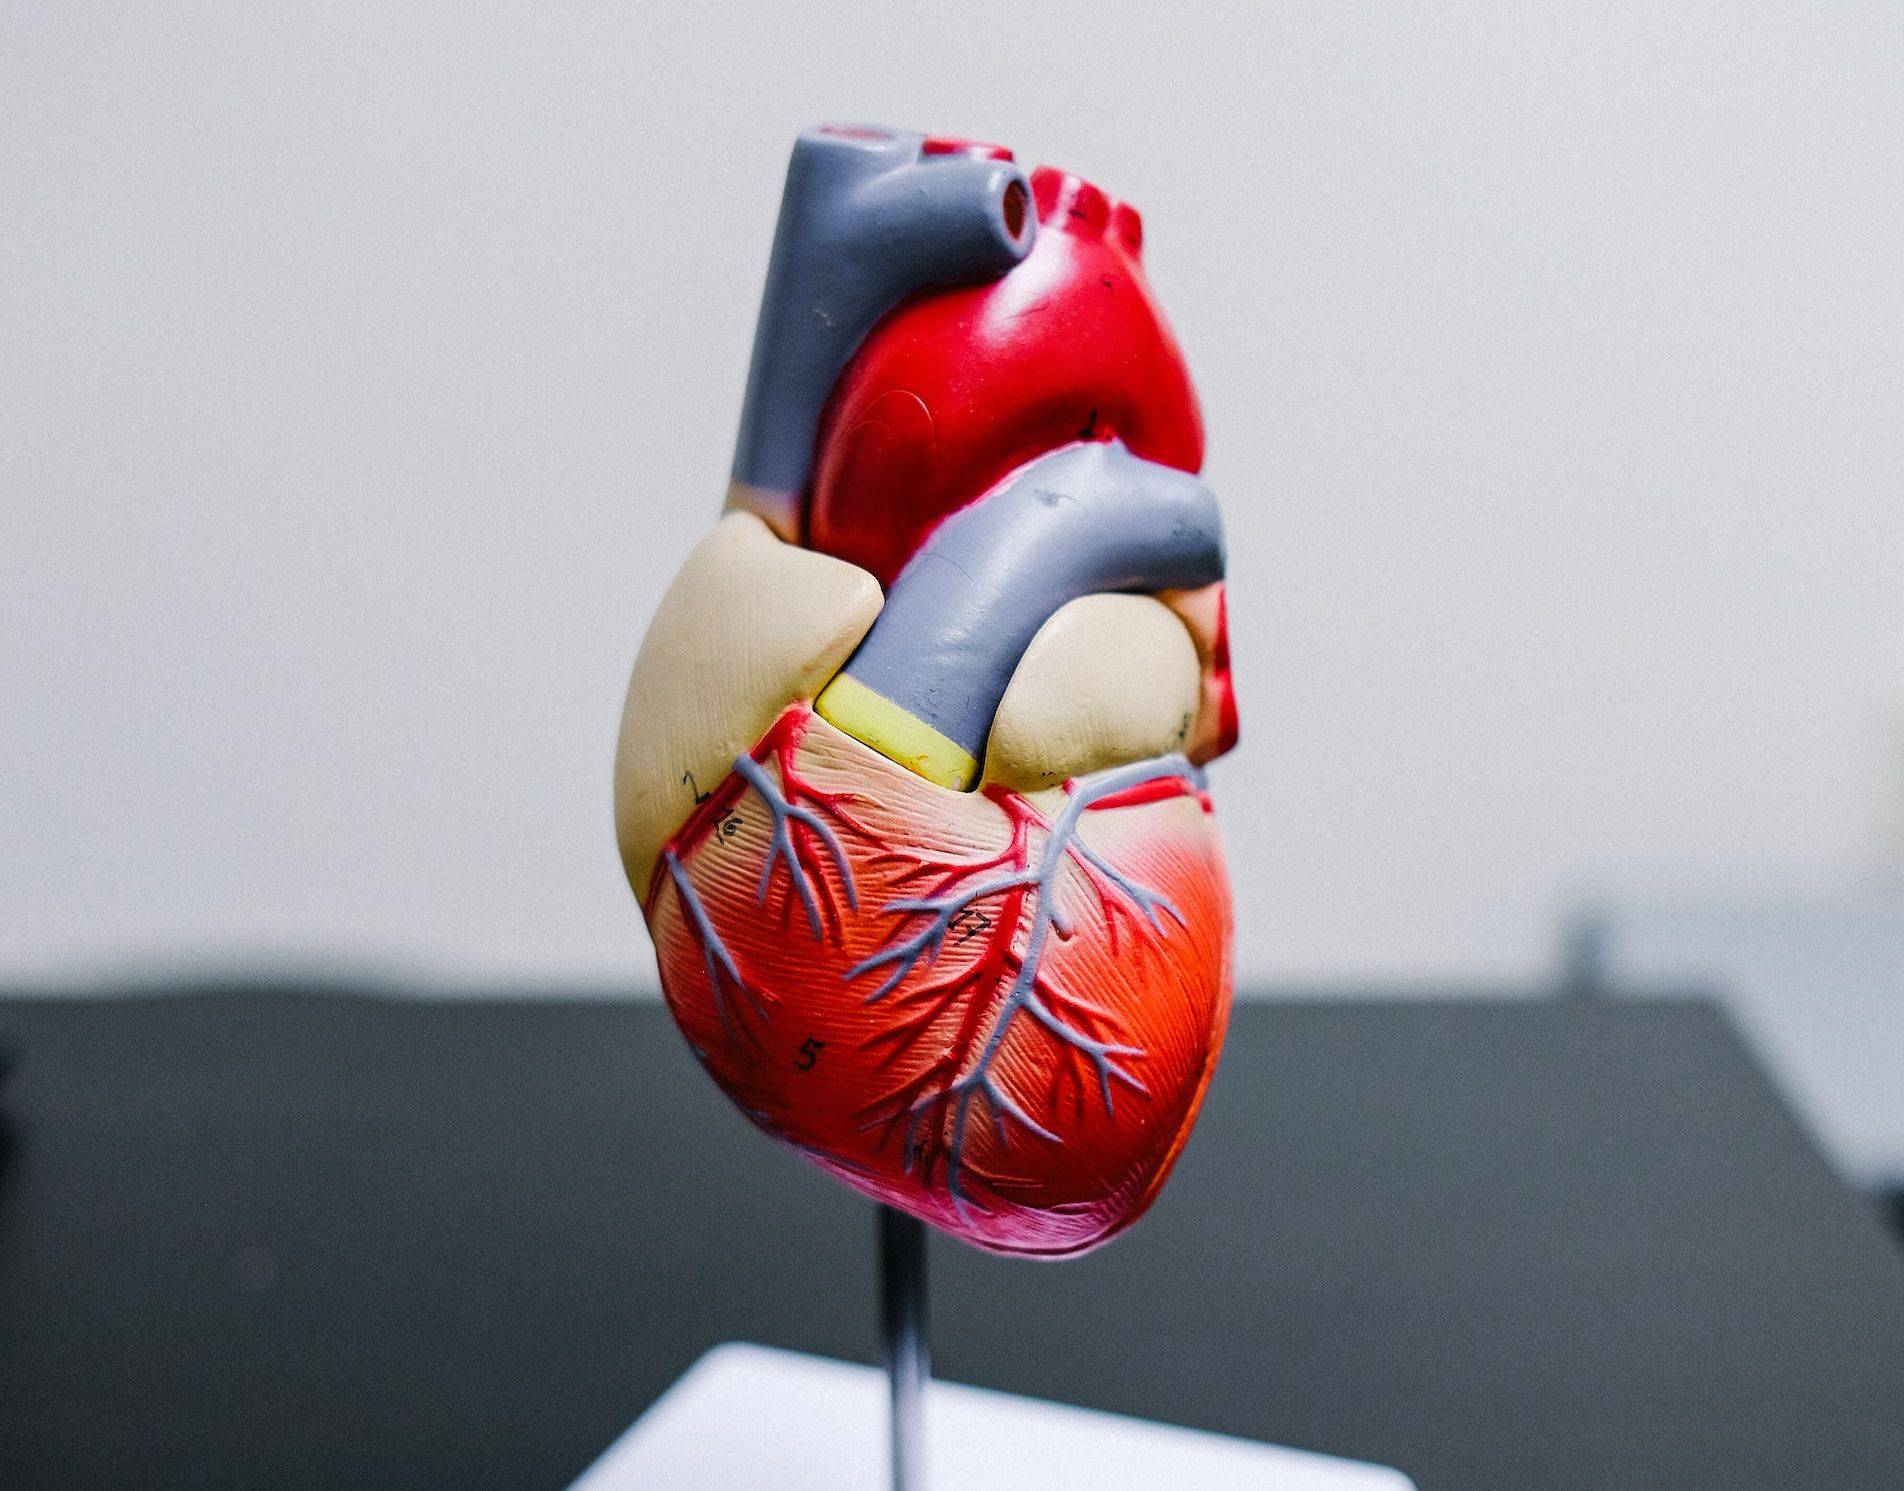 heart model explaining an angioplasty surgery